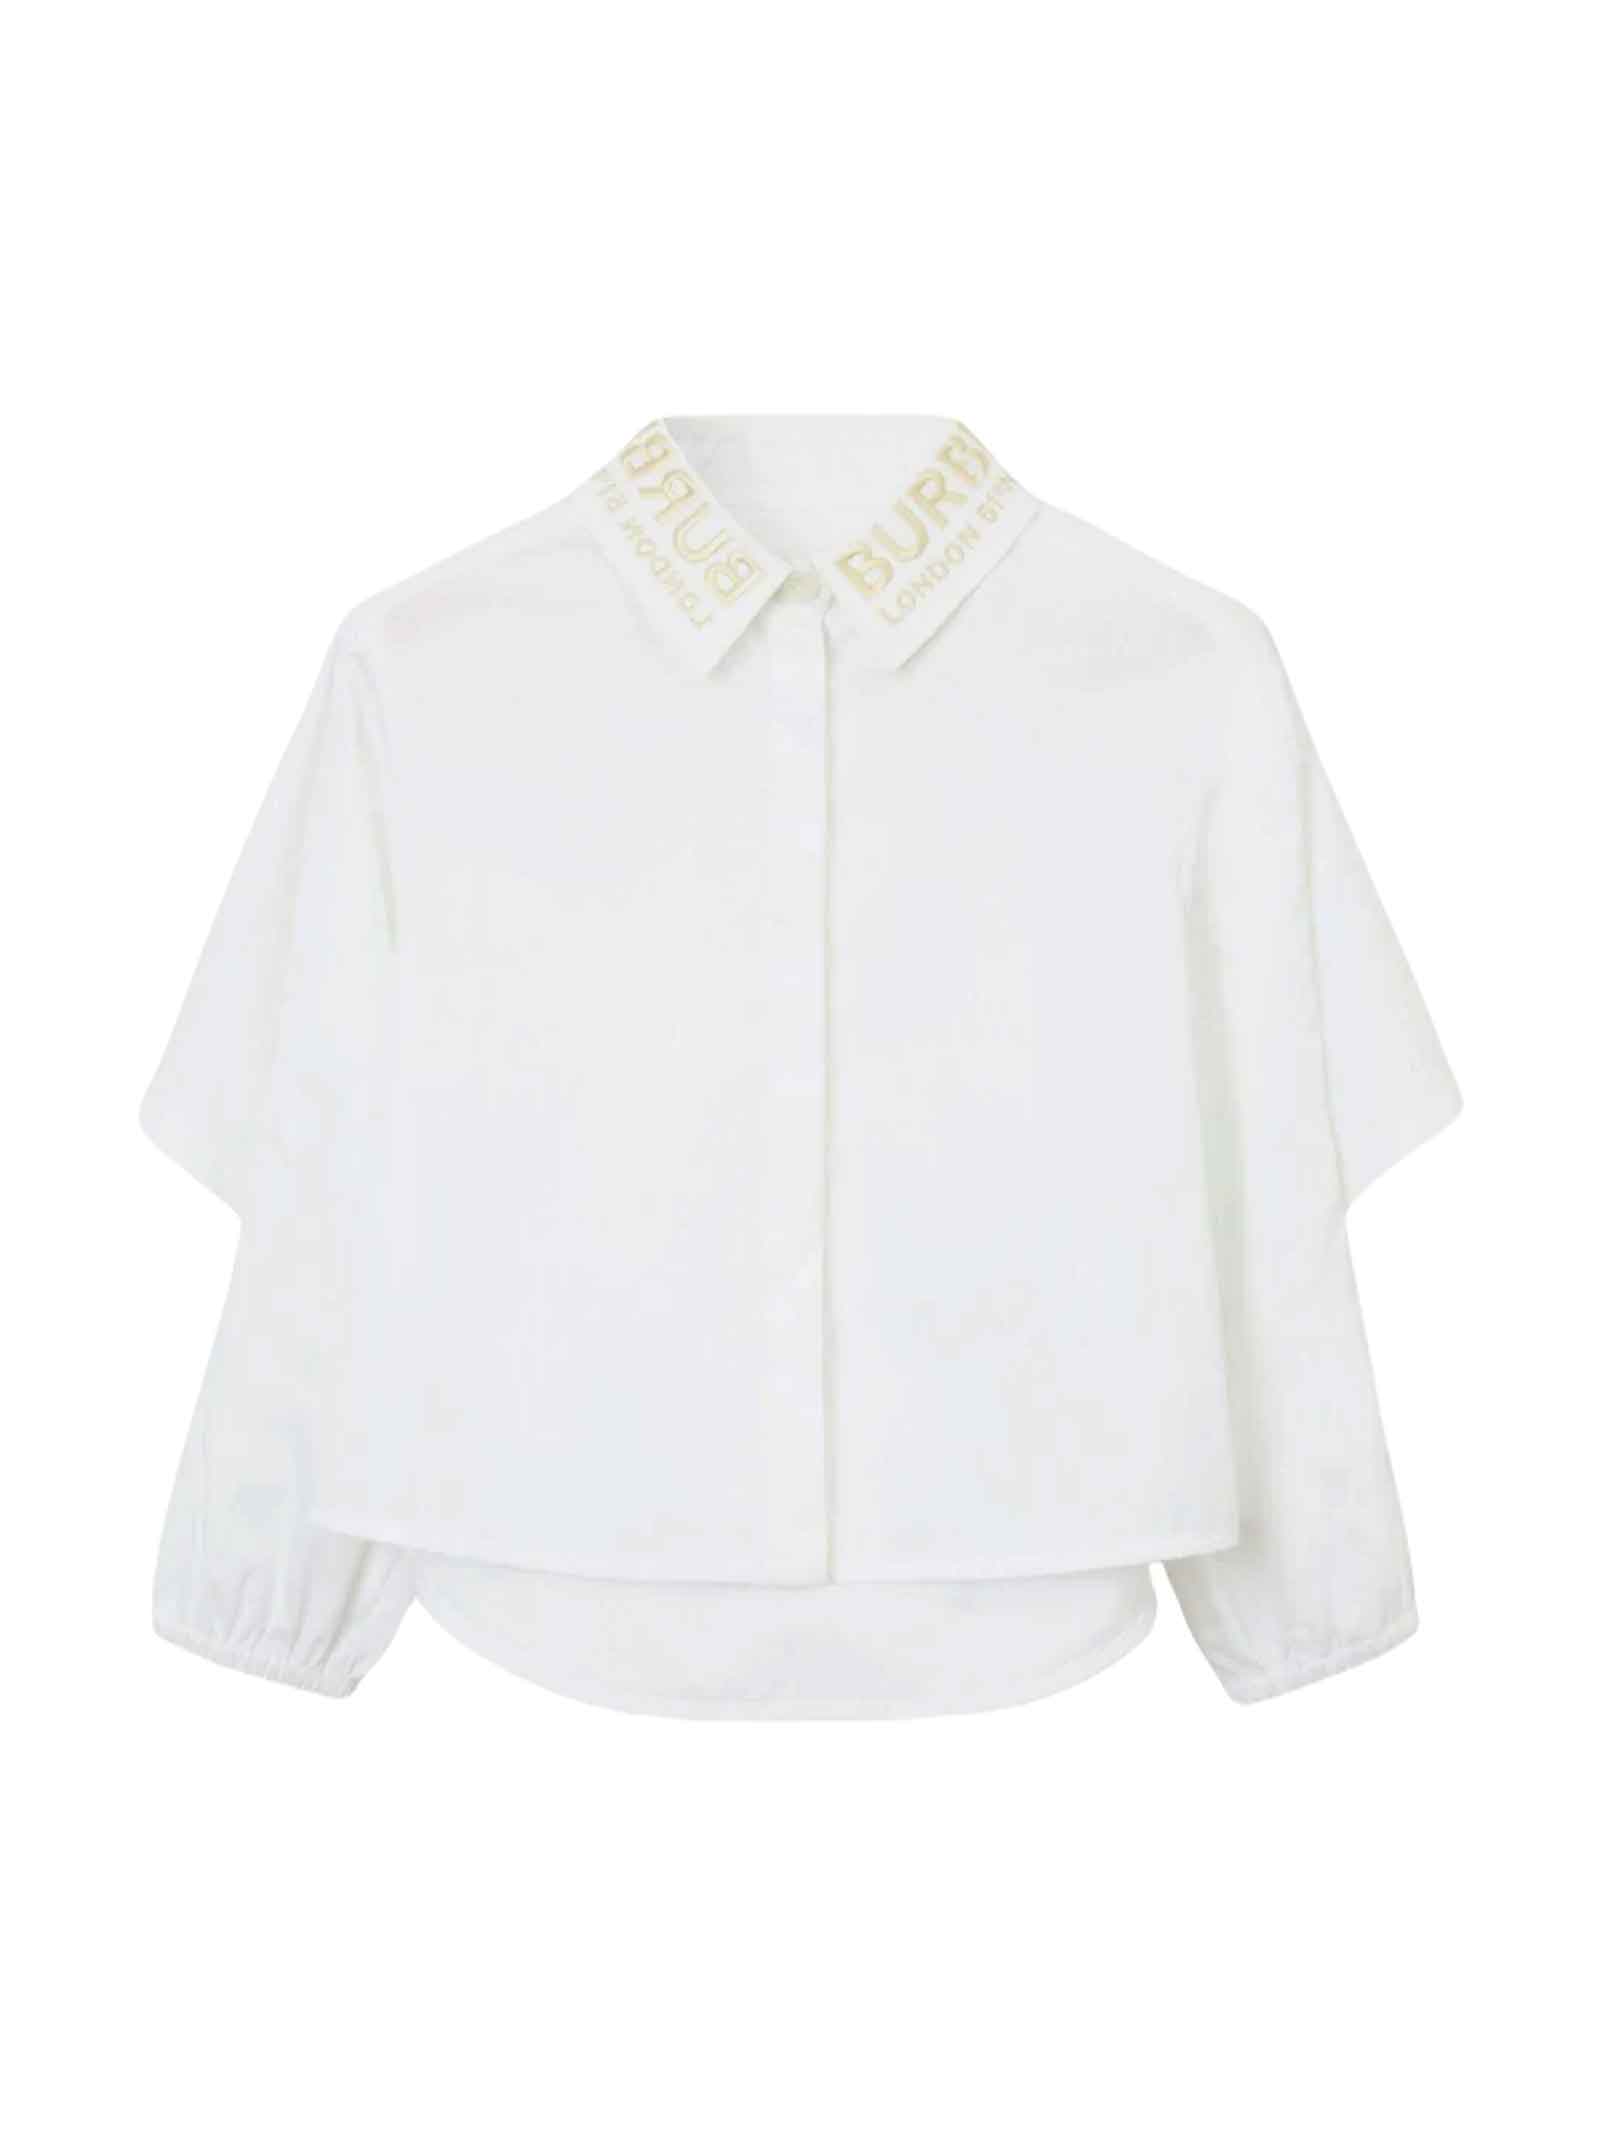 Burberry White Shirt Girl